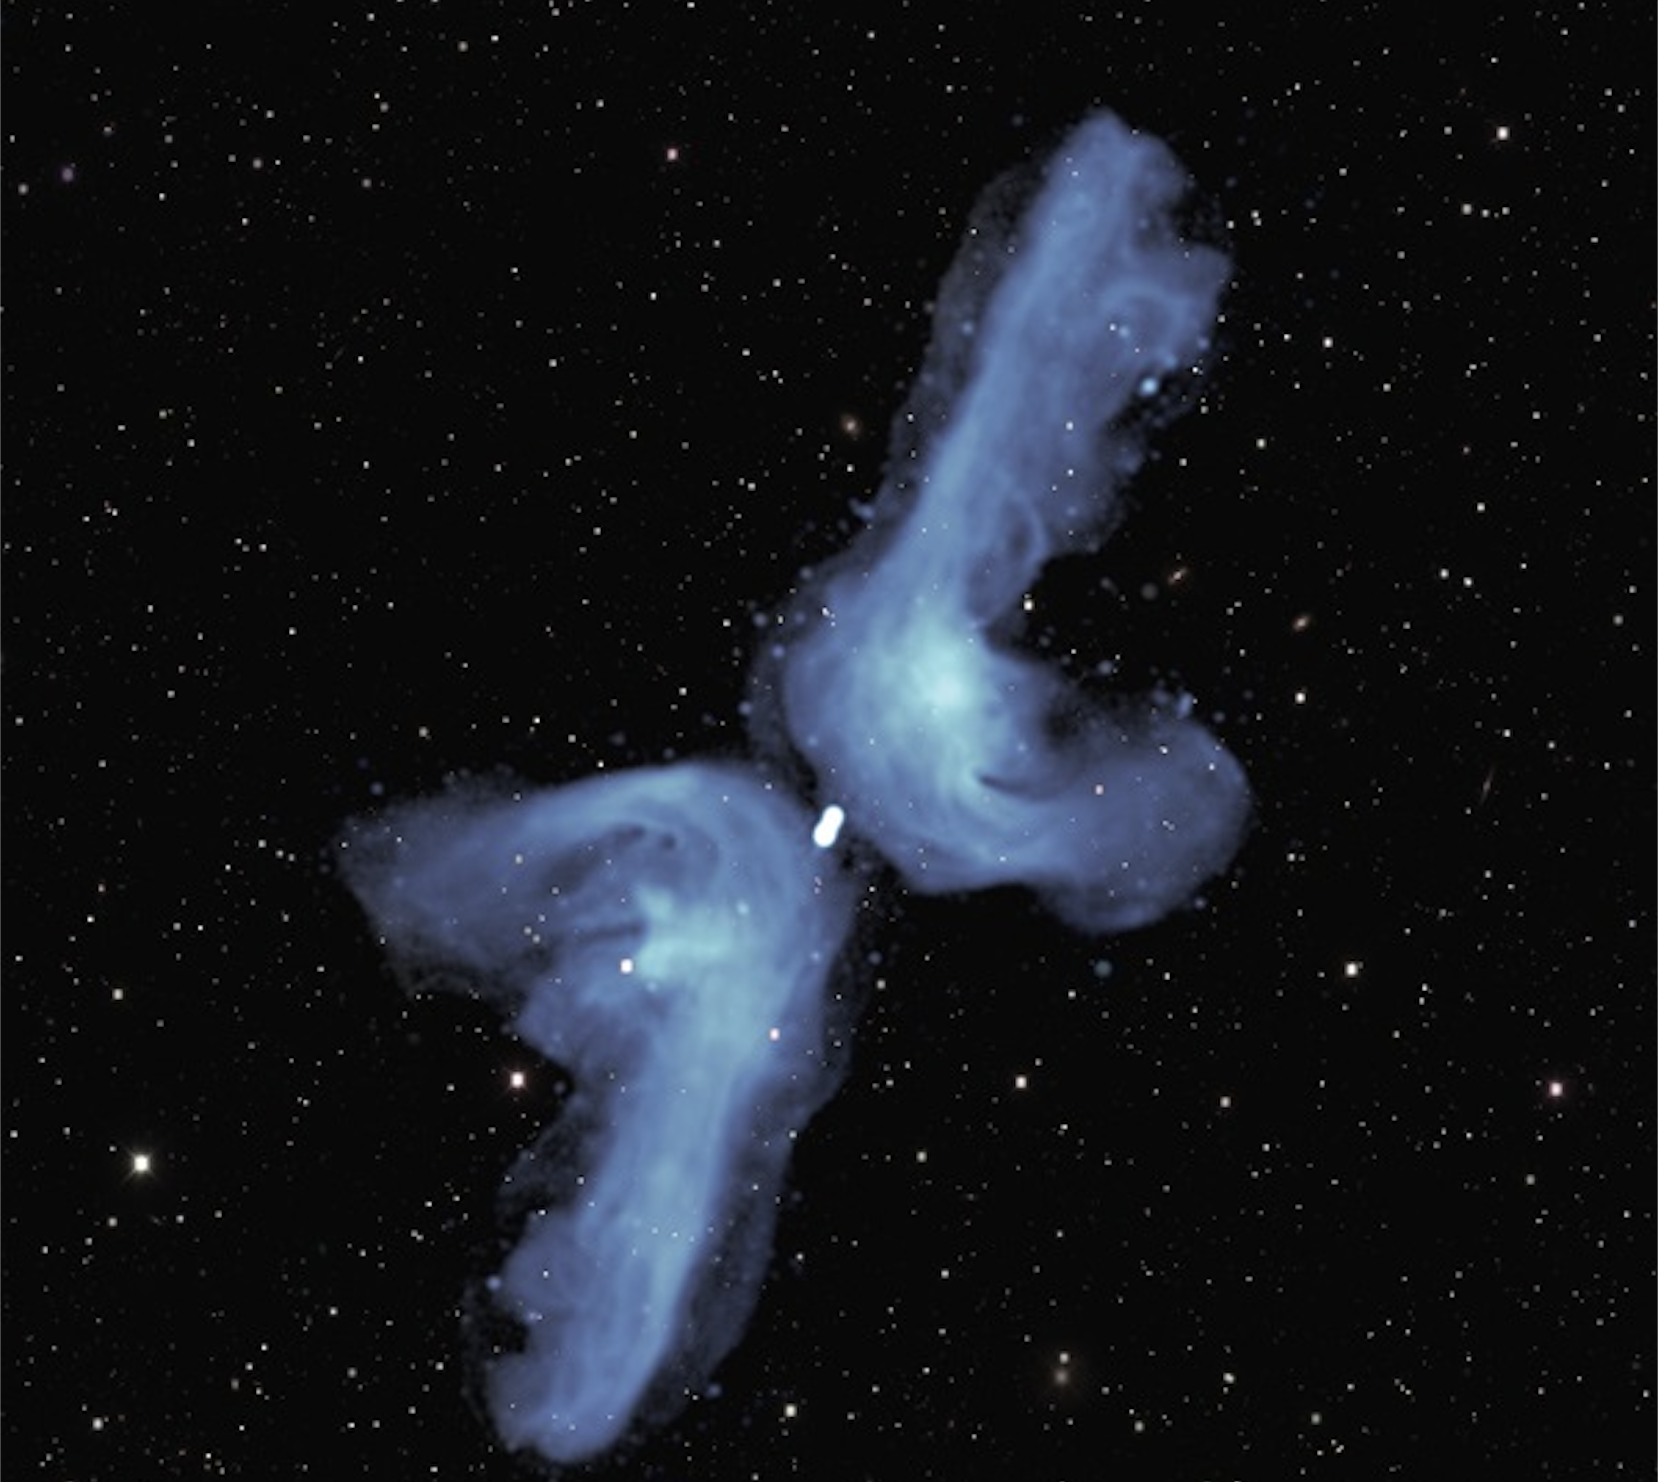 L'étrange galaxie PKS 2014-55 en forme de boomerang a des jets radio qui semblent courbes, plutôt que droits. © NRAO/AUI/NSF, Sarao, DES